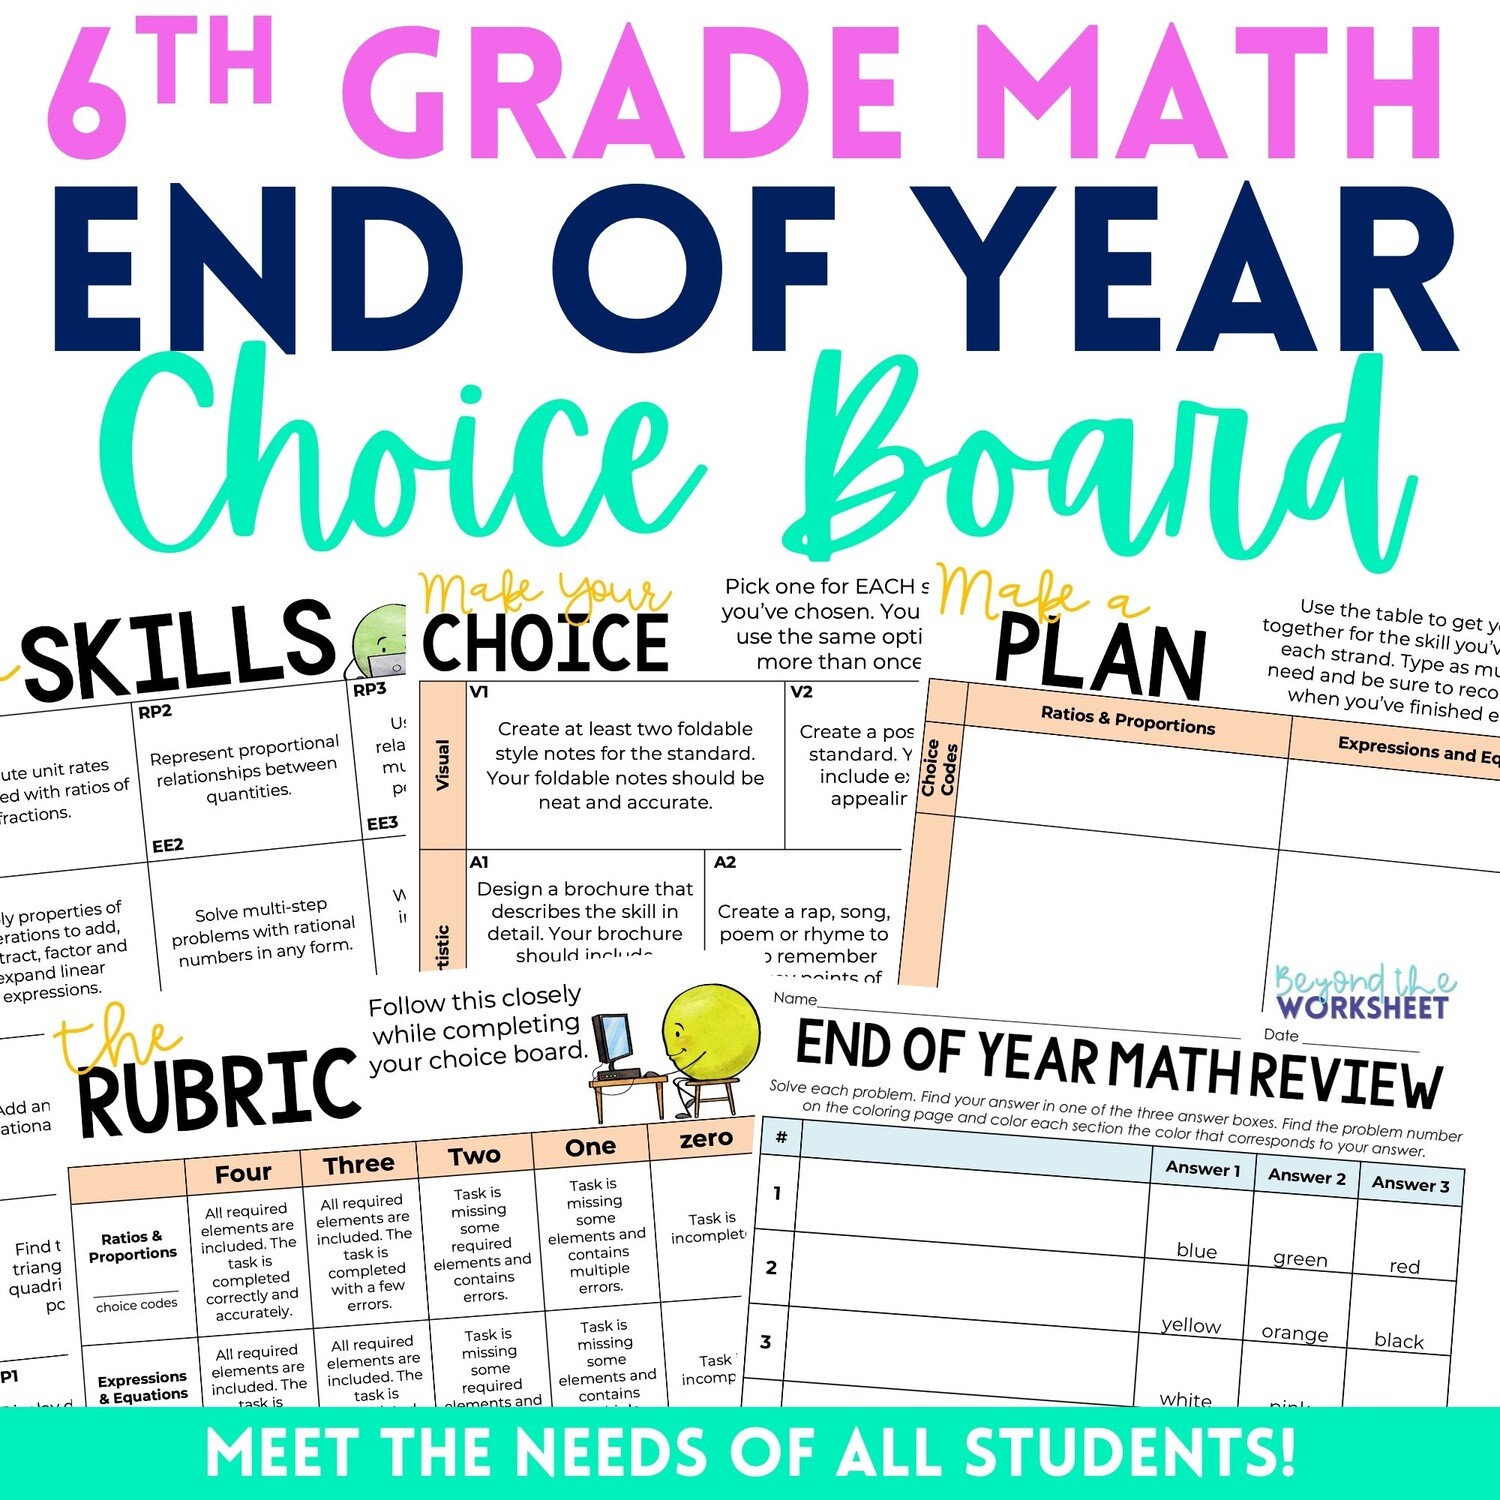 6th Grade End of Year Math Choice Board